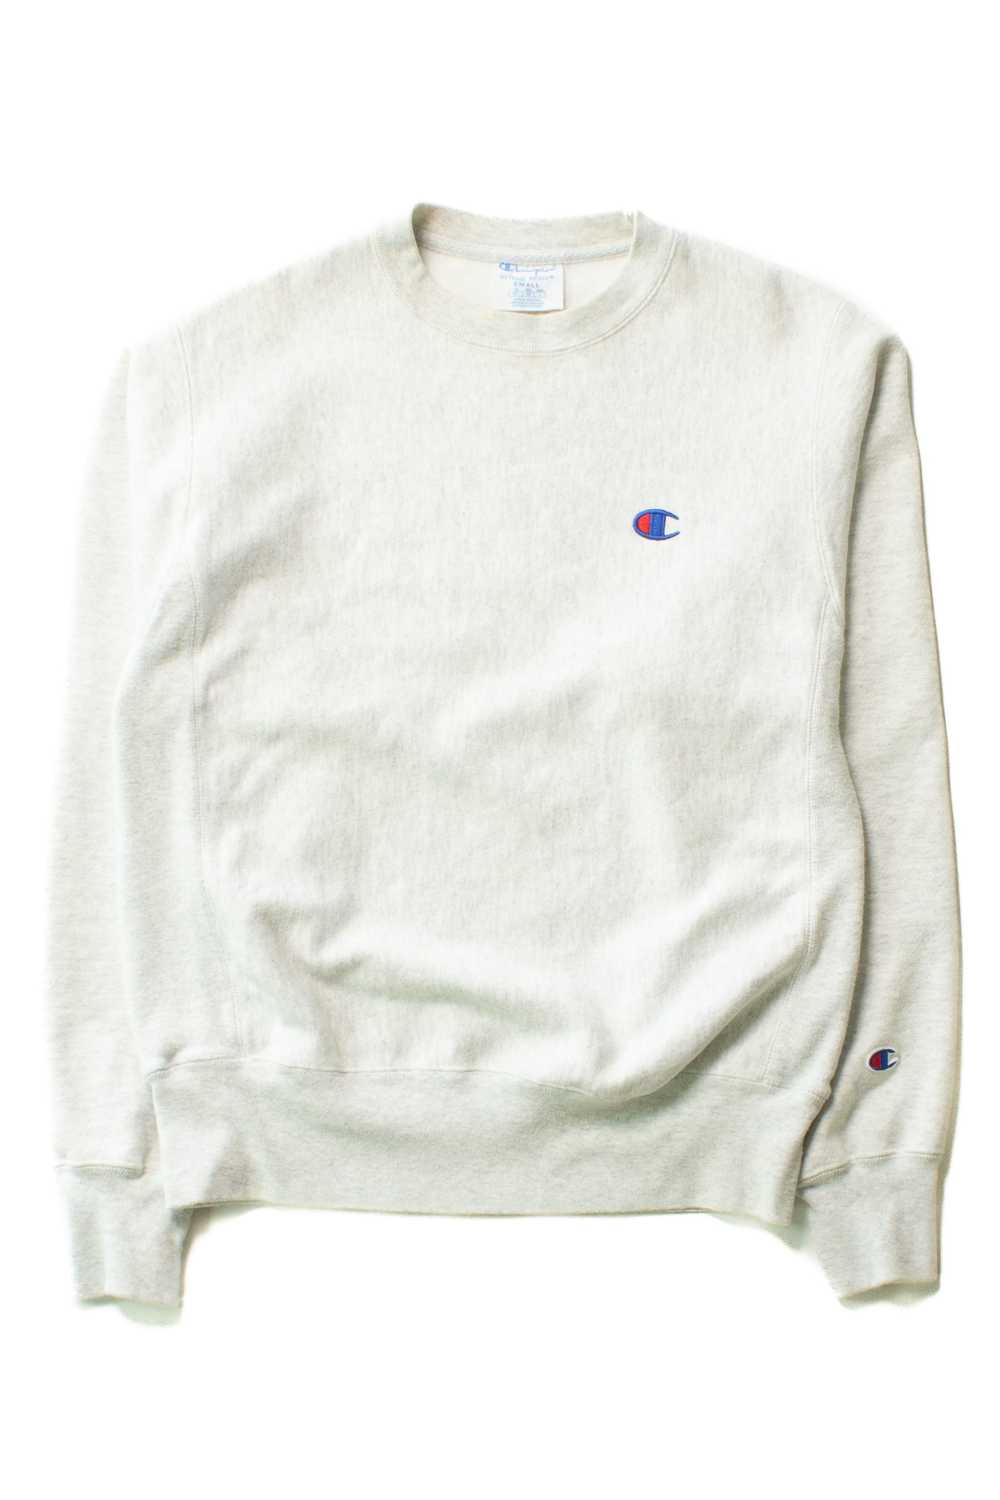 Gray Champion Sweatshirt (1990s) - image 1